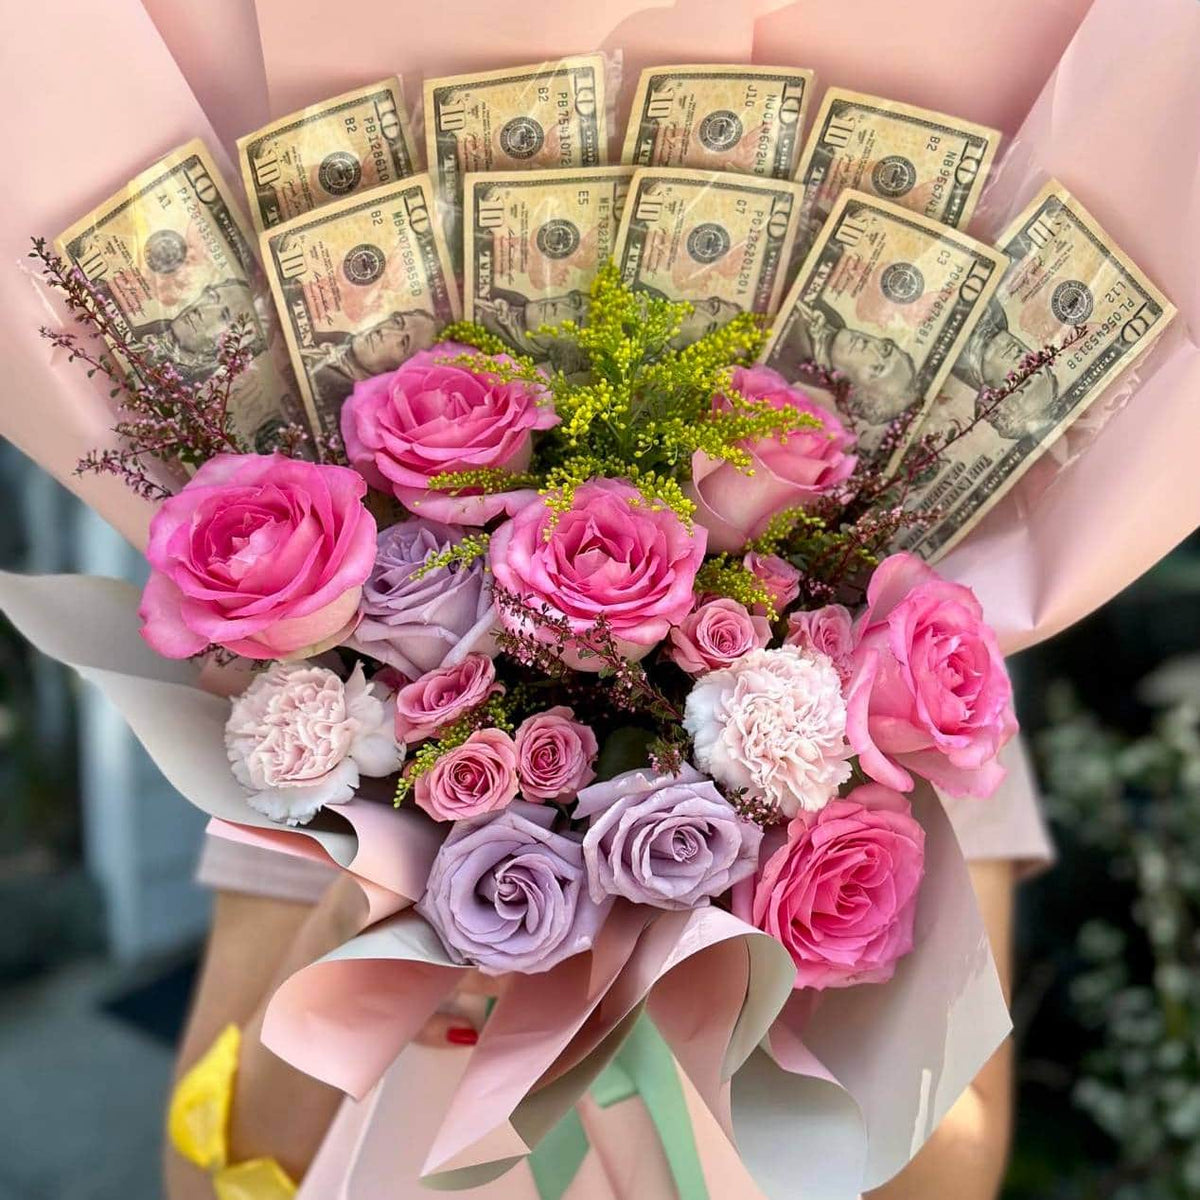 Money flower bouquet